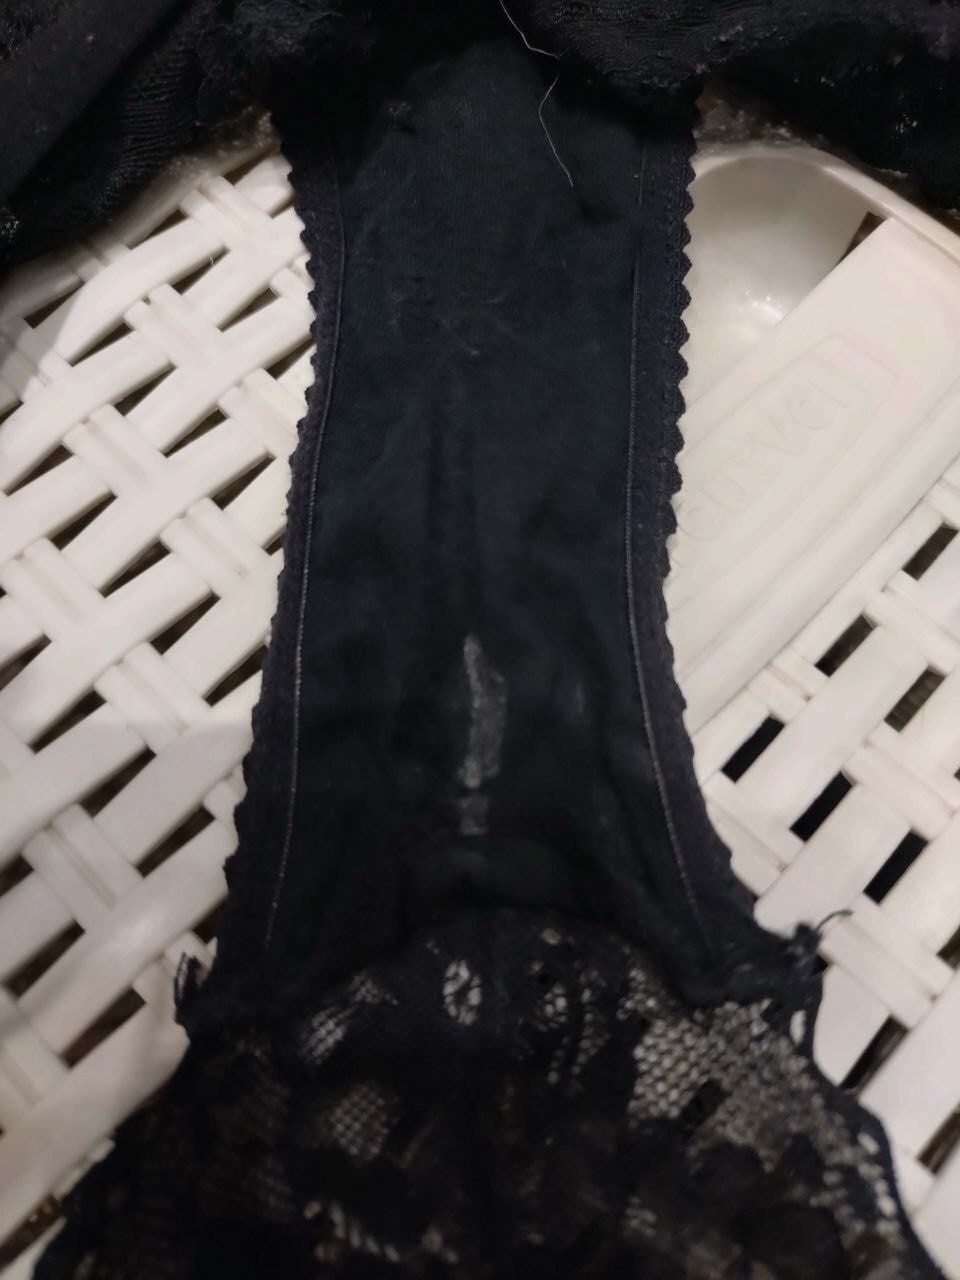 sperm on panties.  worn all day